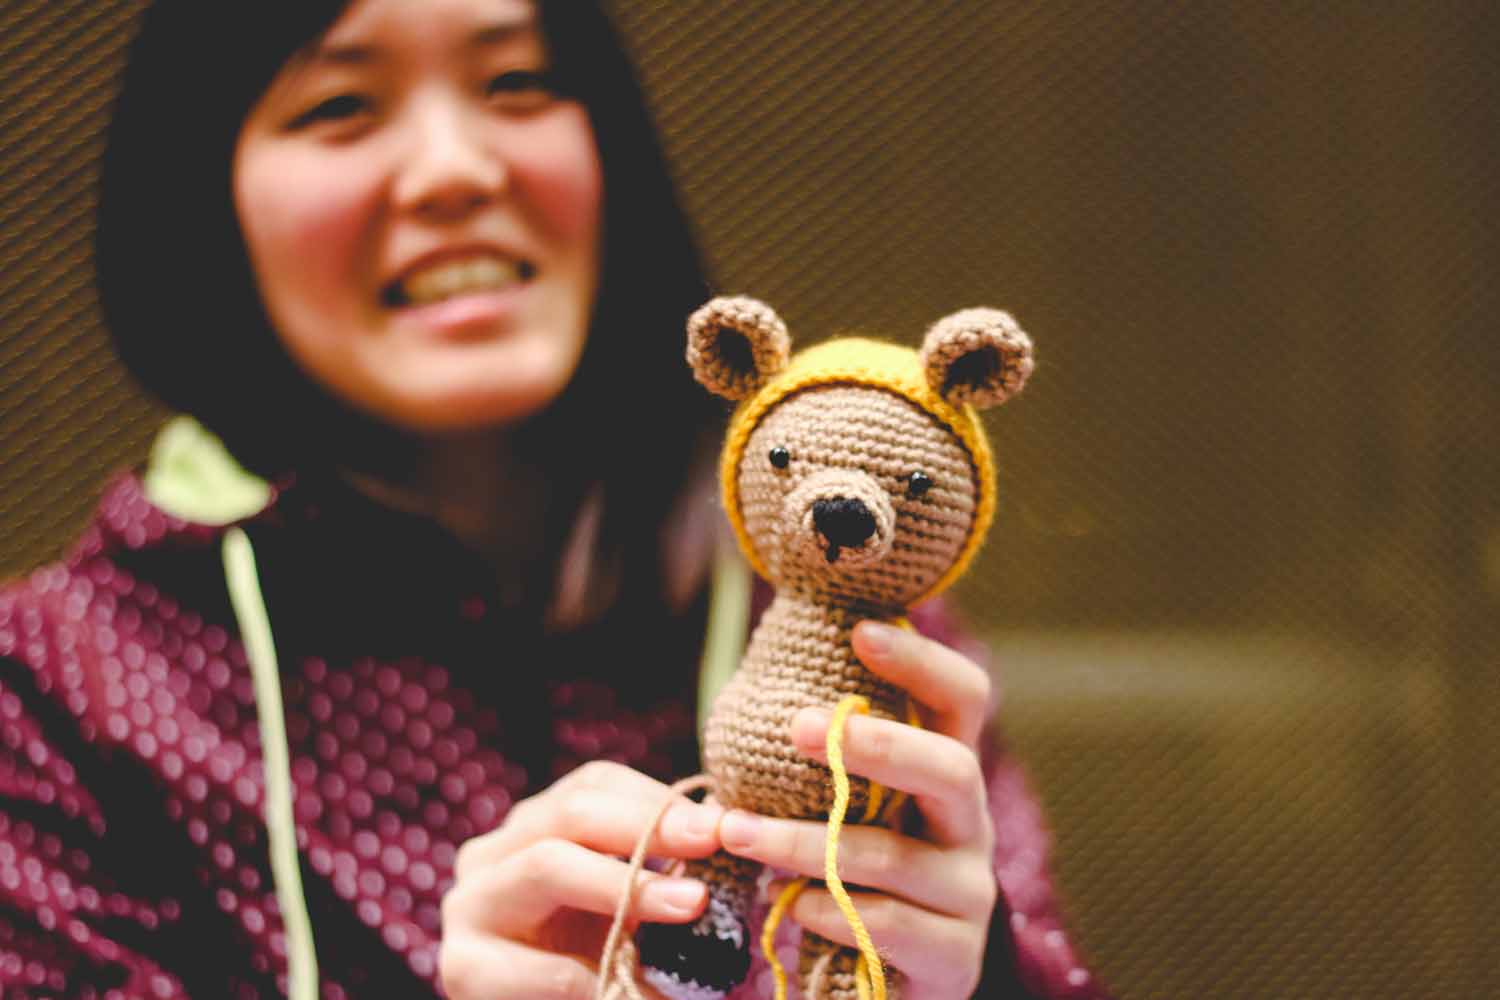 Nana Kizaki displays a handmade lion which she is in the process of crocheting. Photo by Hanna Yowell.